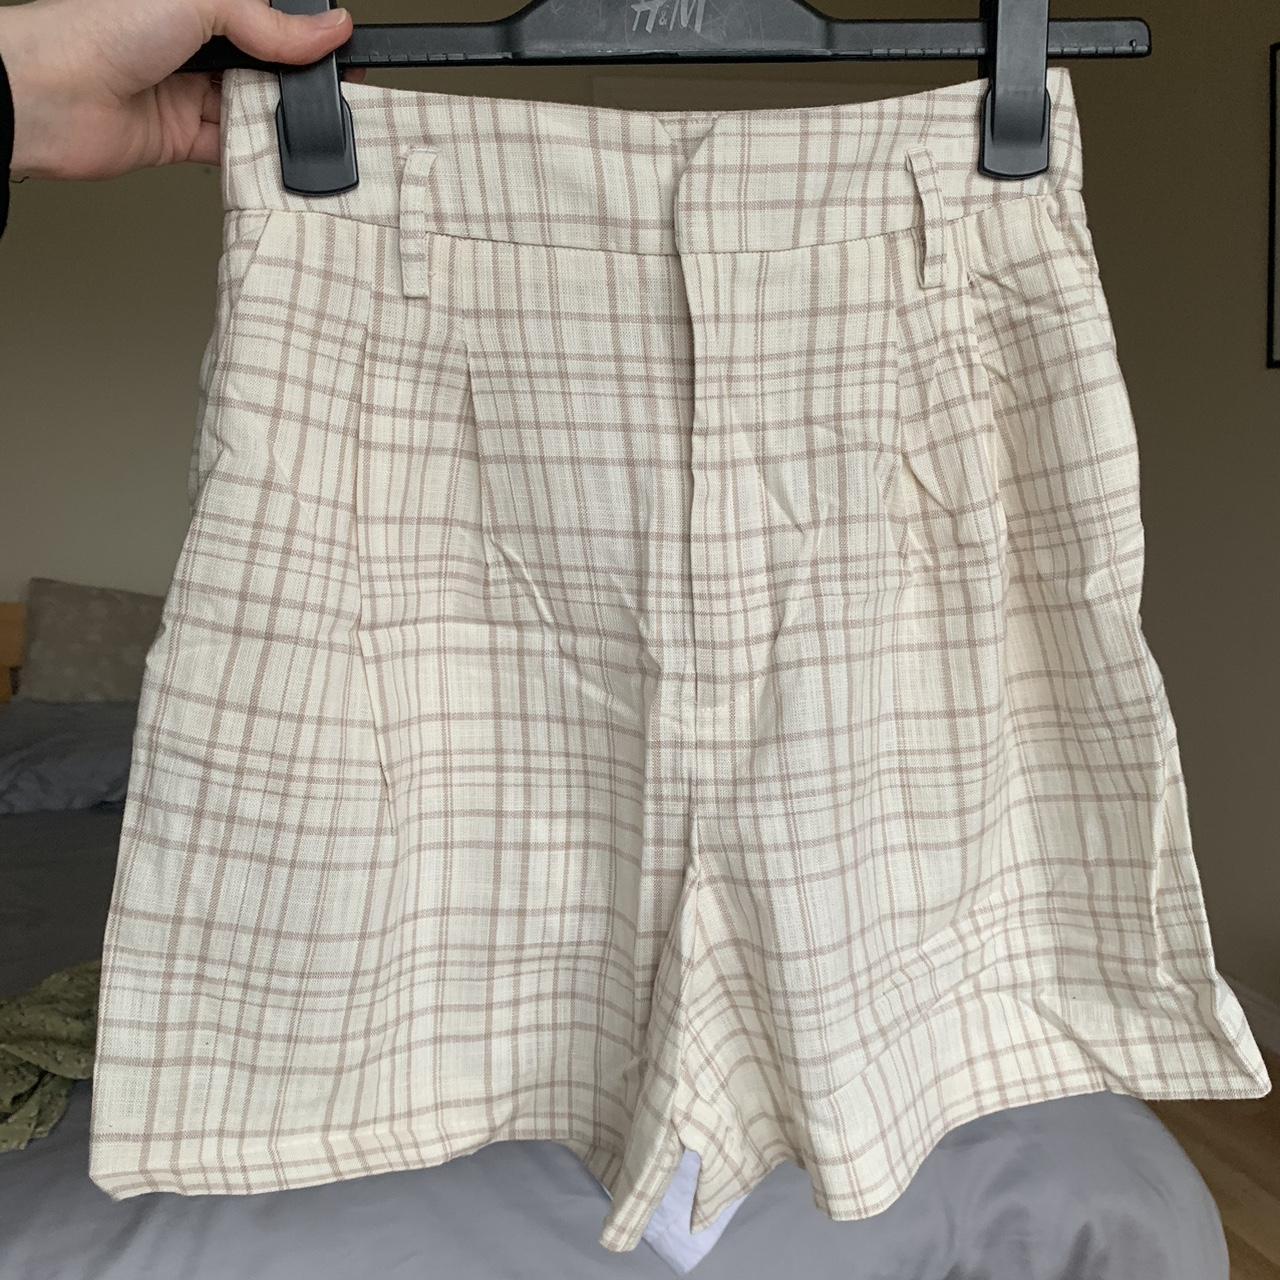 Beige tartan shorts, perfect for spring/summer 🐚 - Depop